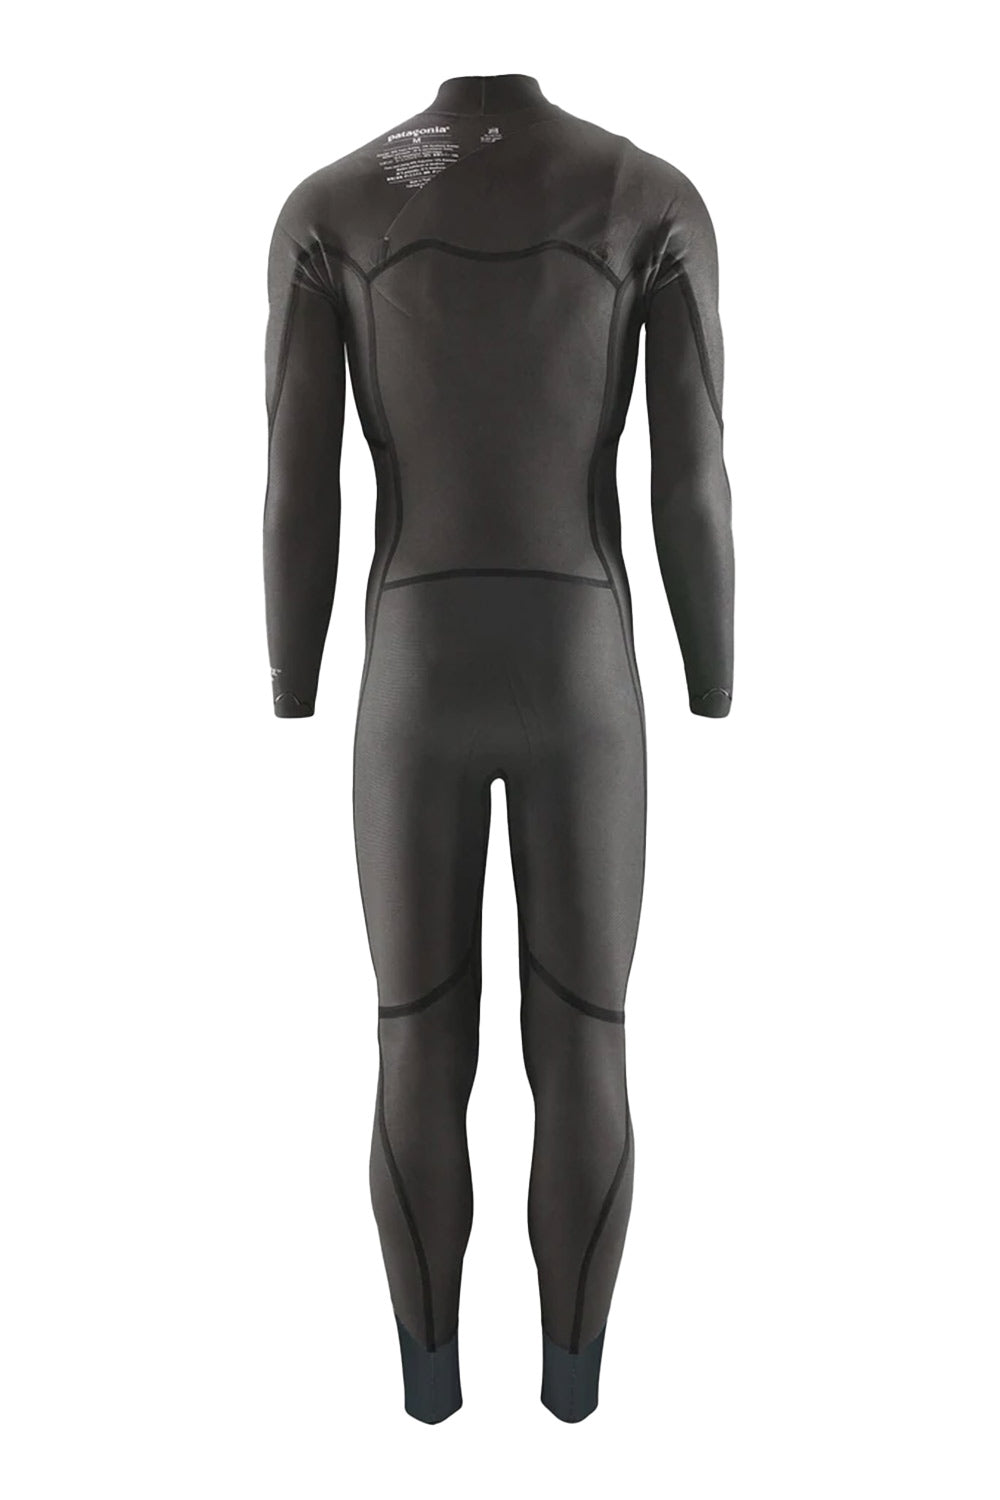 Patagonia Men's R1 Lite Yulex Front-Zip Full Wetsuit